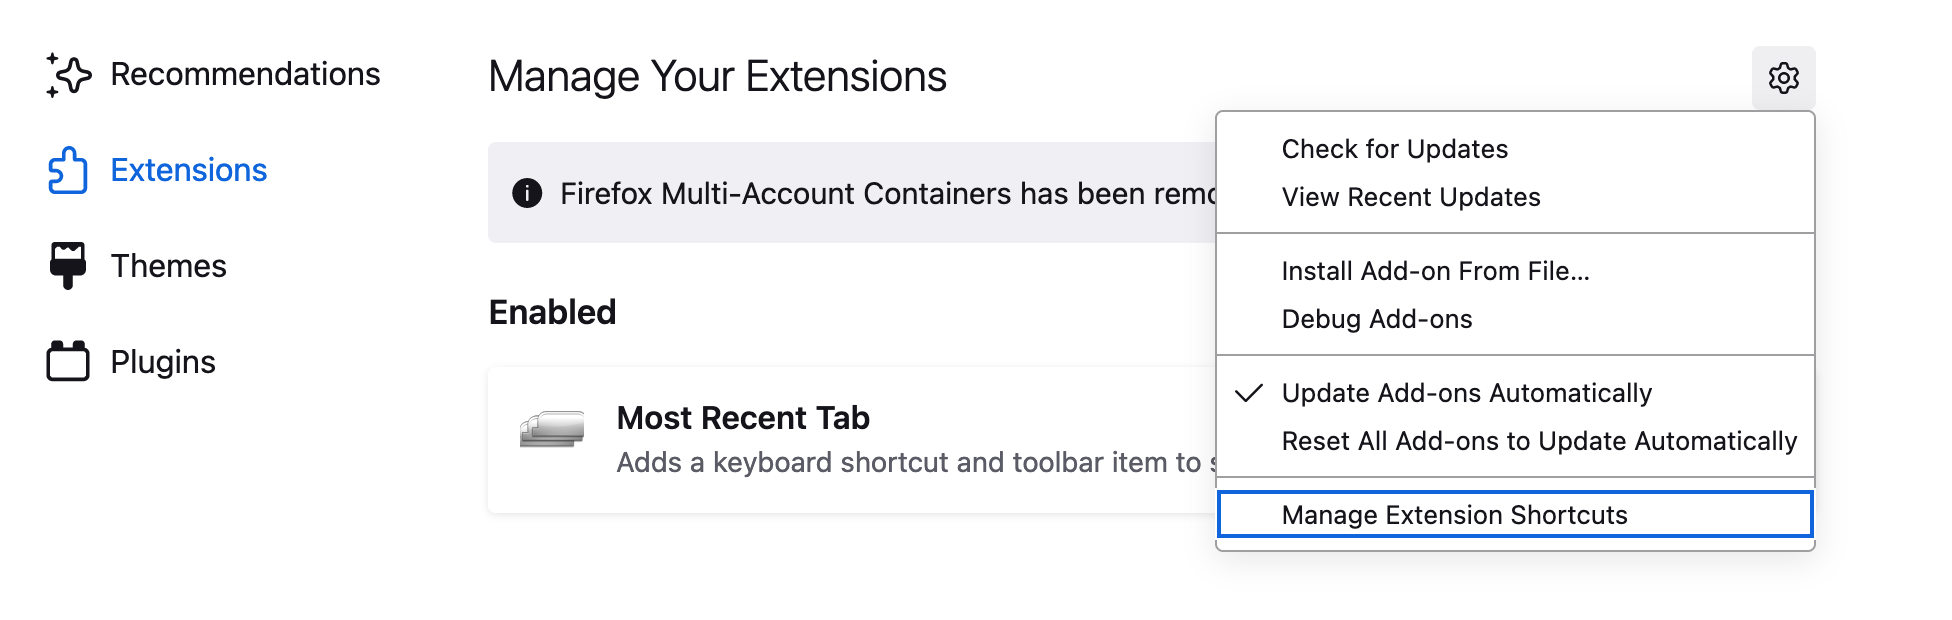 Most Recent Tab - Keyboard shortcut for last tab